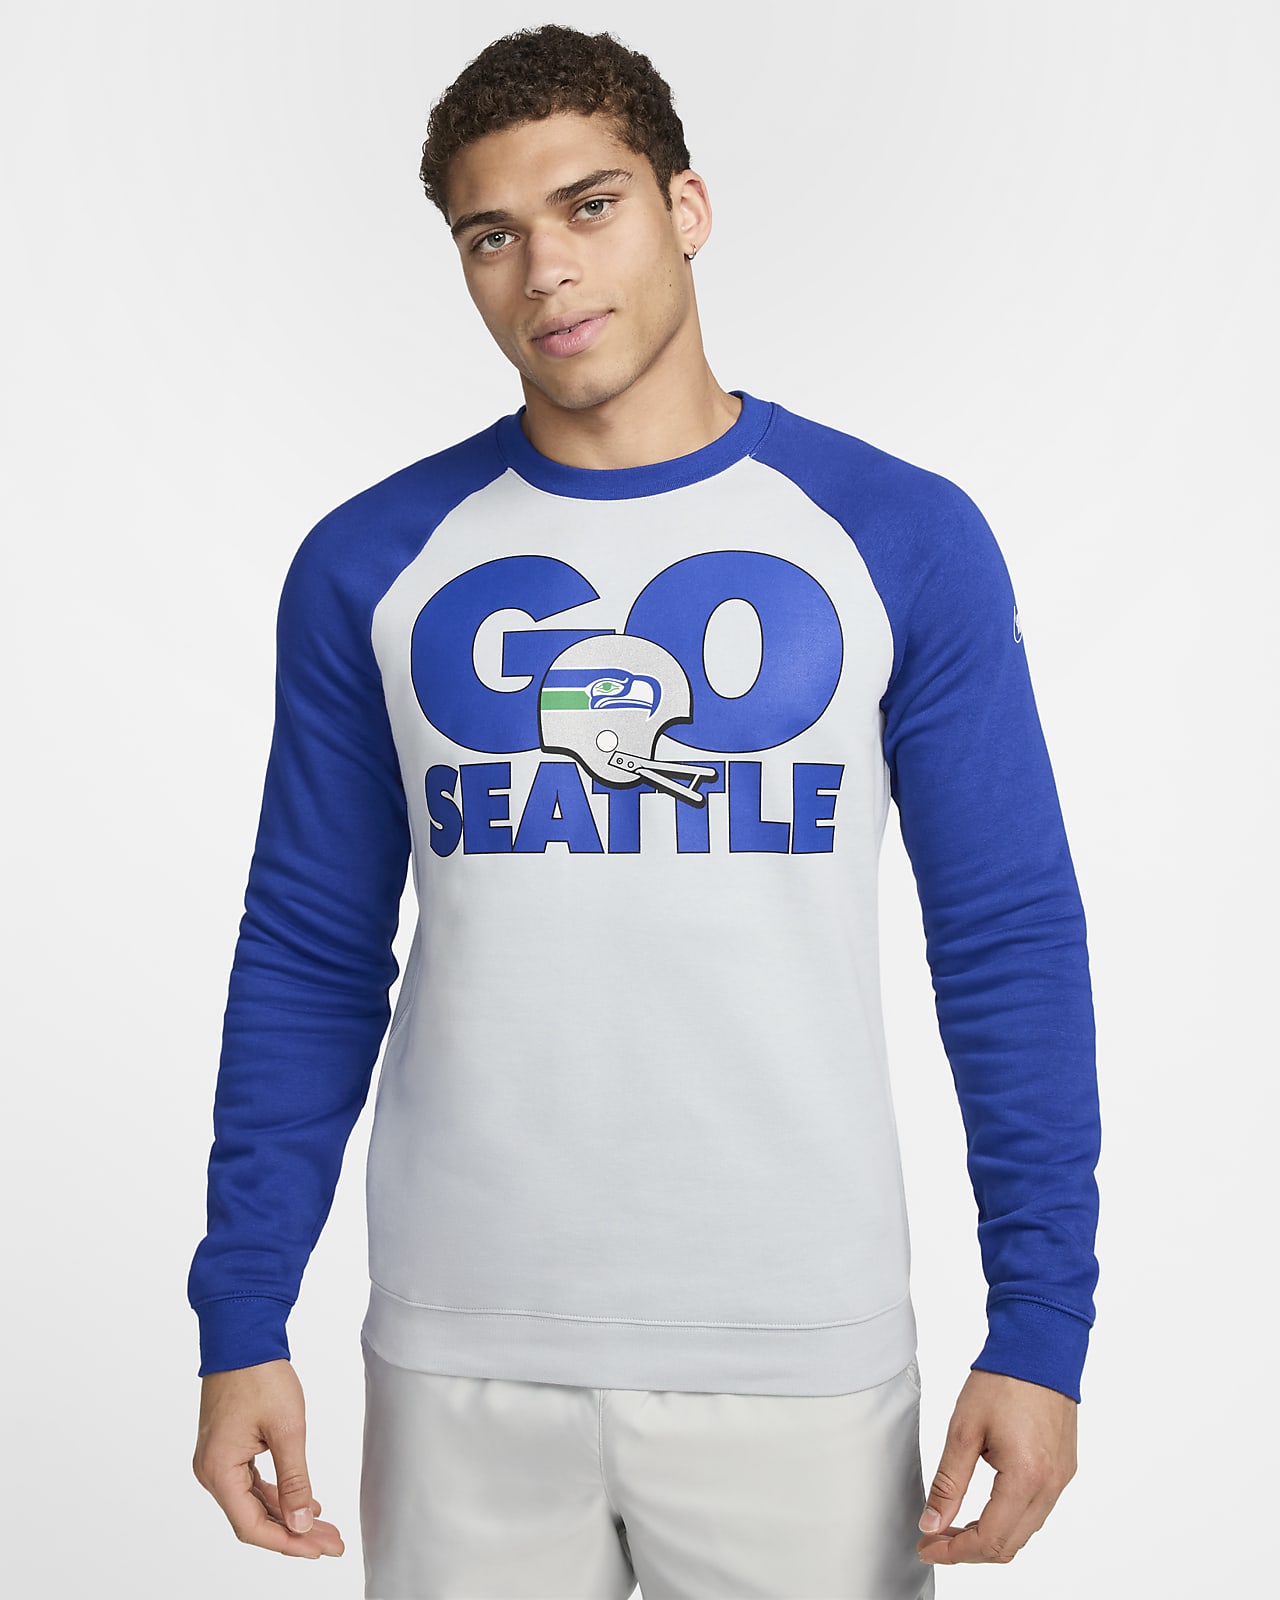 Nike Historic Raglan (NFL Seahawks) Herren-Sweatshirt